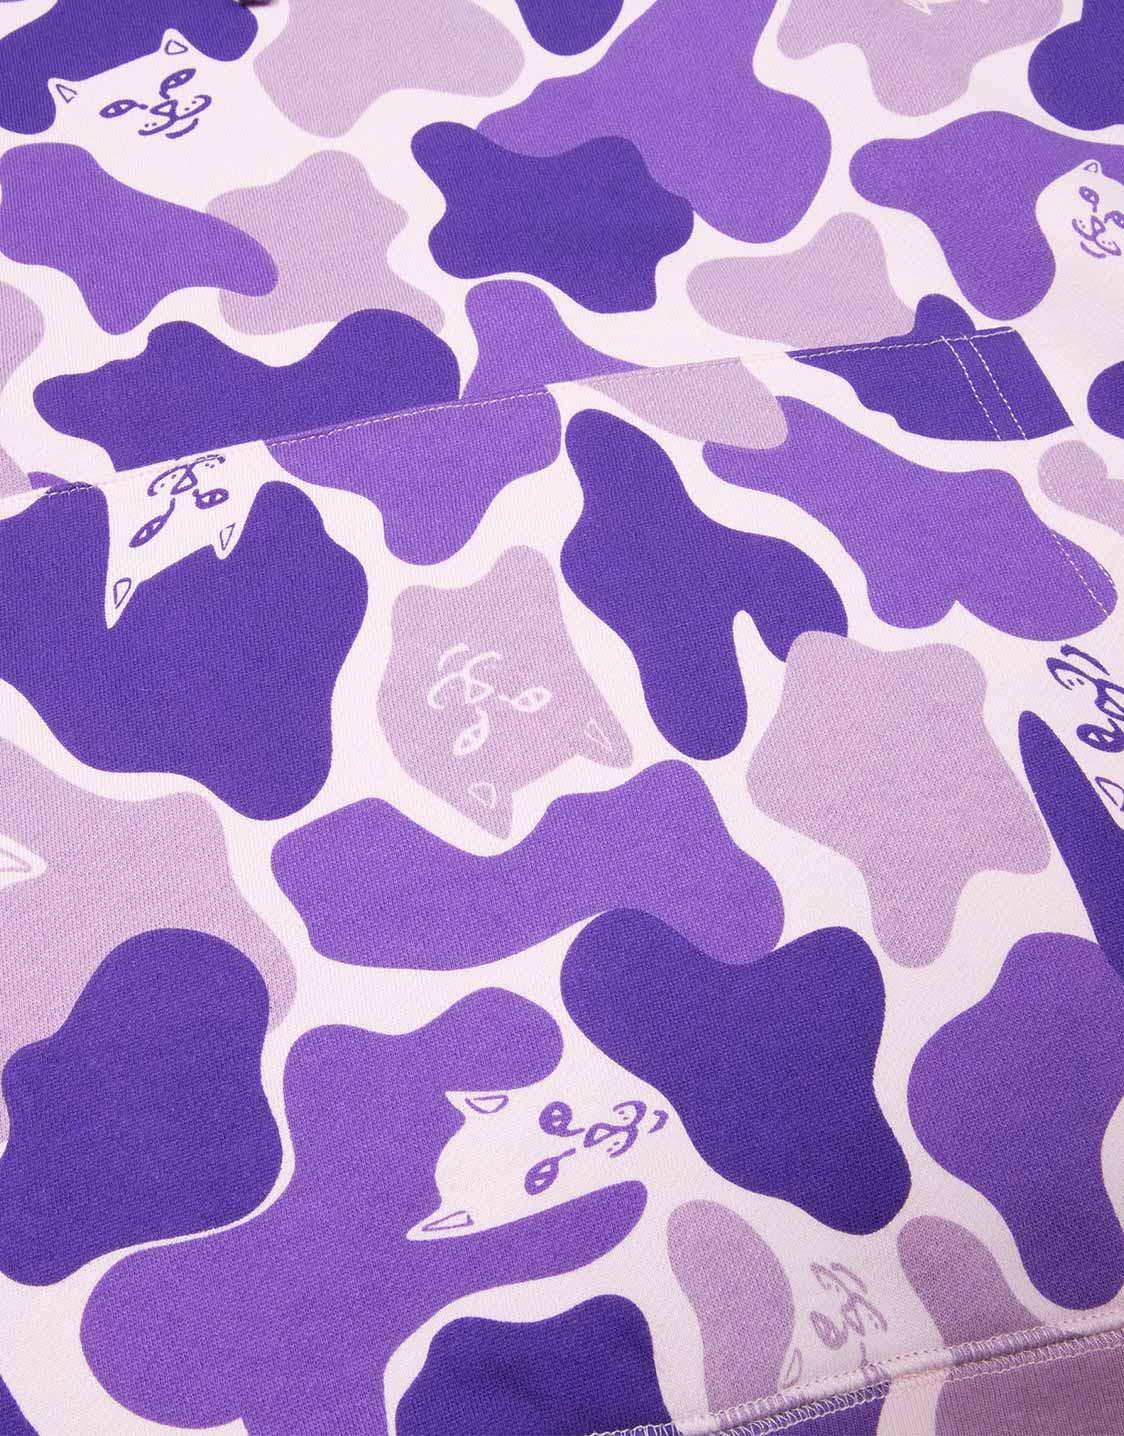 Purple Camouflage Wallpaper Amazing Purple Camo Wallpaper HD Blue